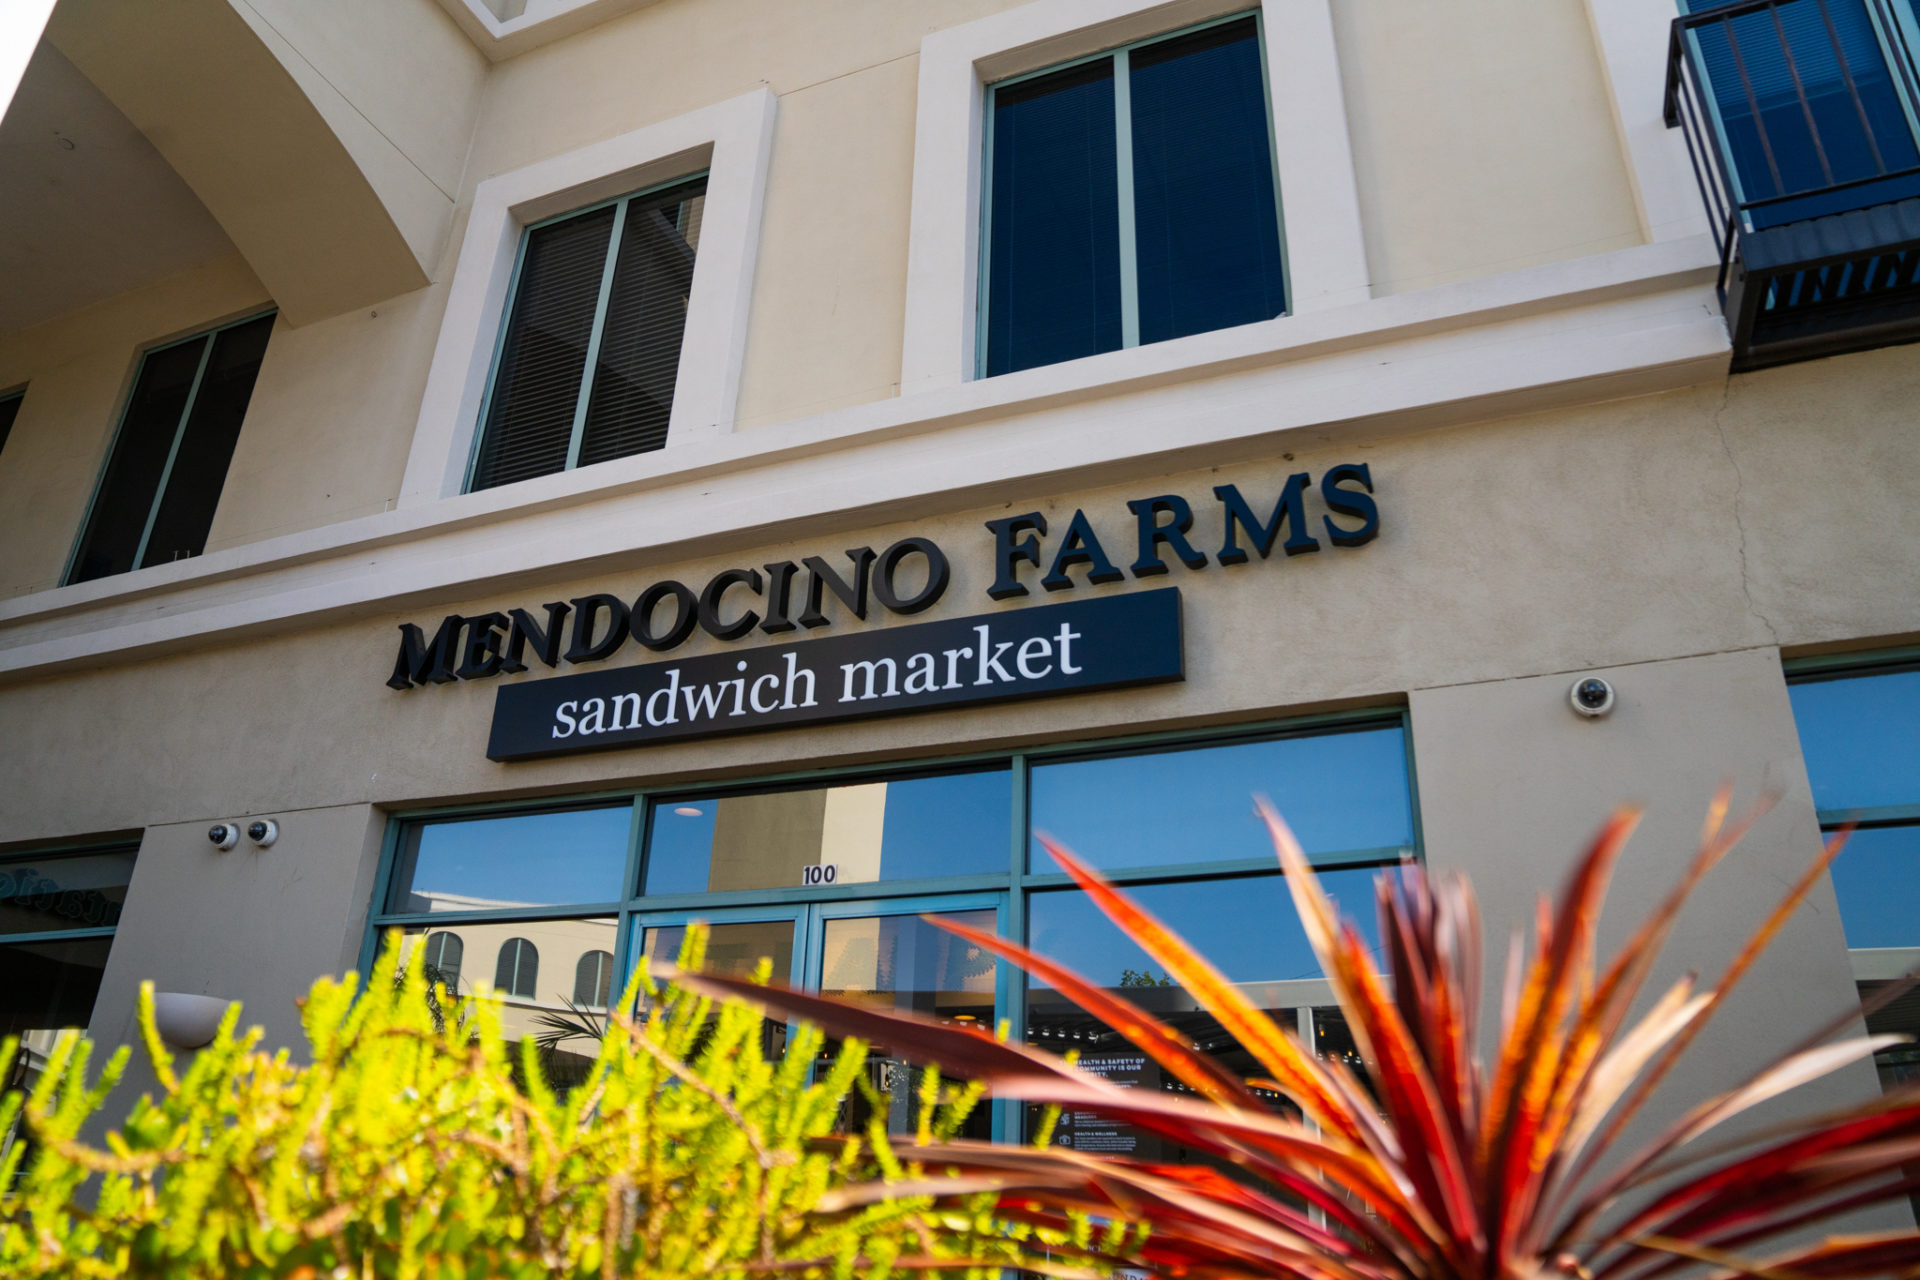 Mendocino Farms Sandwich Market Sign